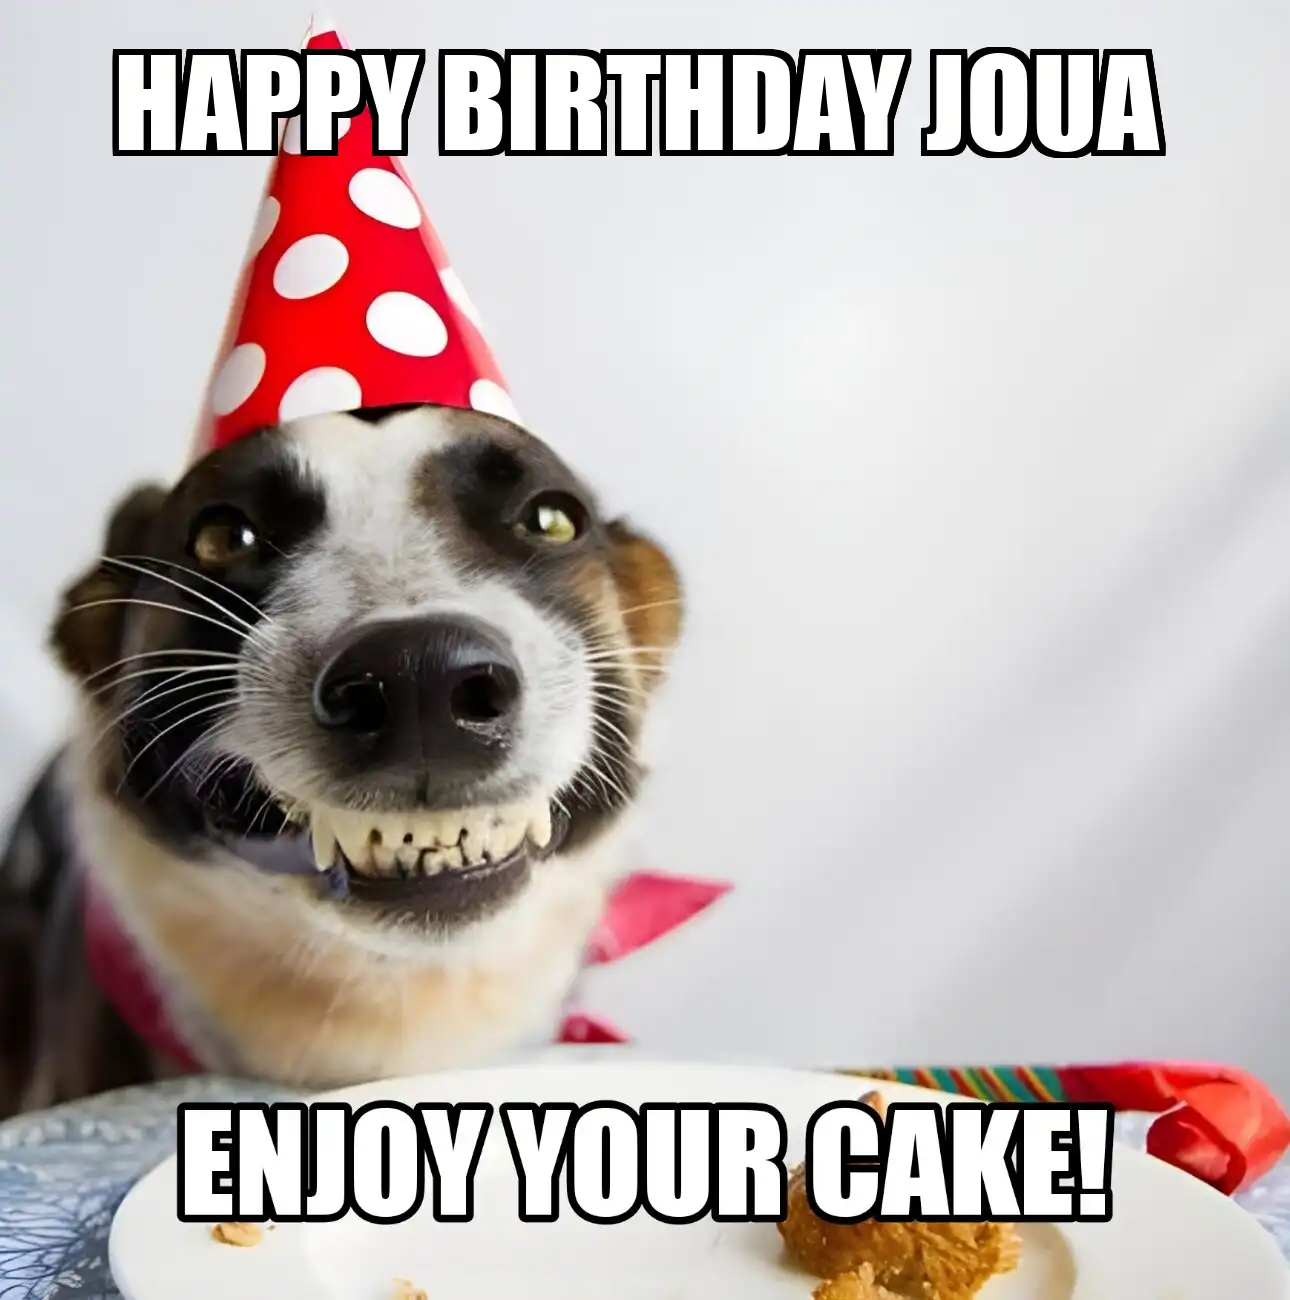 Happy Birthday Joua Enjoy Your Cake Dog Meme